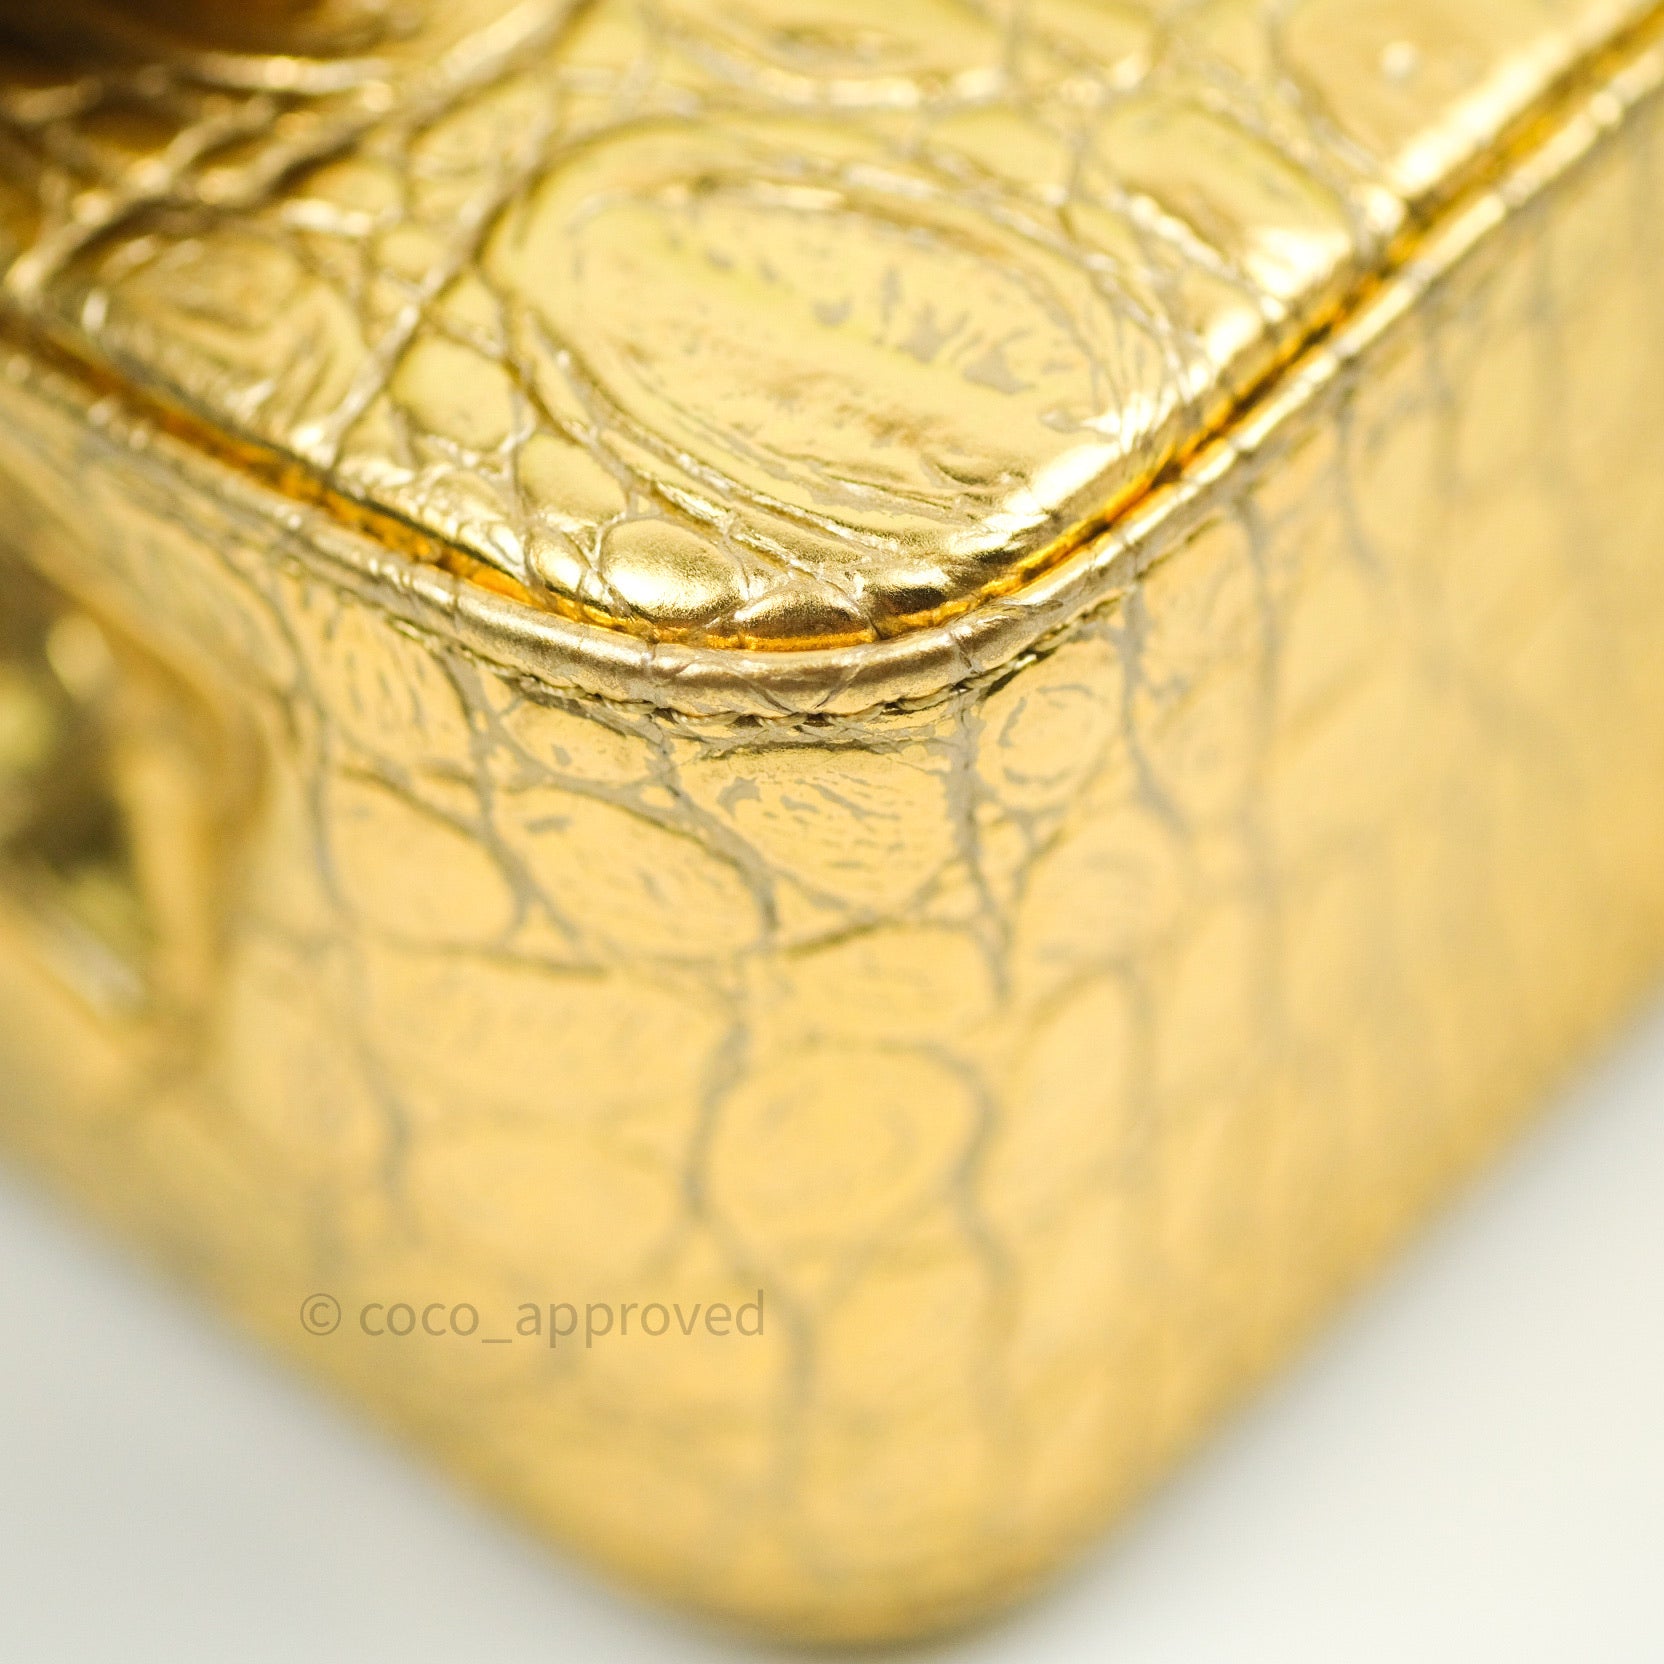 CHANEL Mini Rectangular Flap Bag in Gold Croc Embossed Calfskin